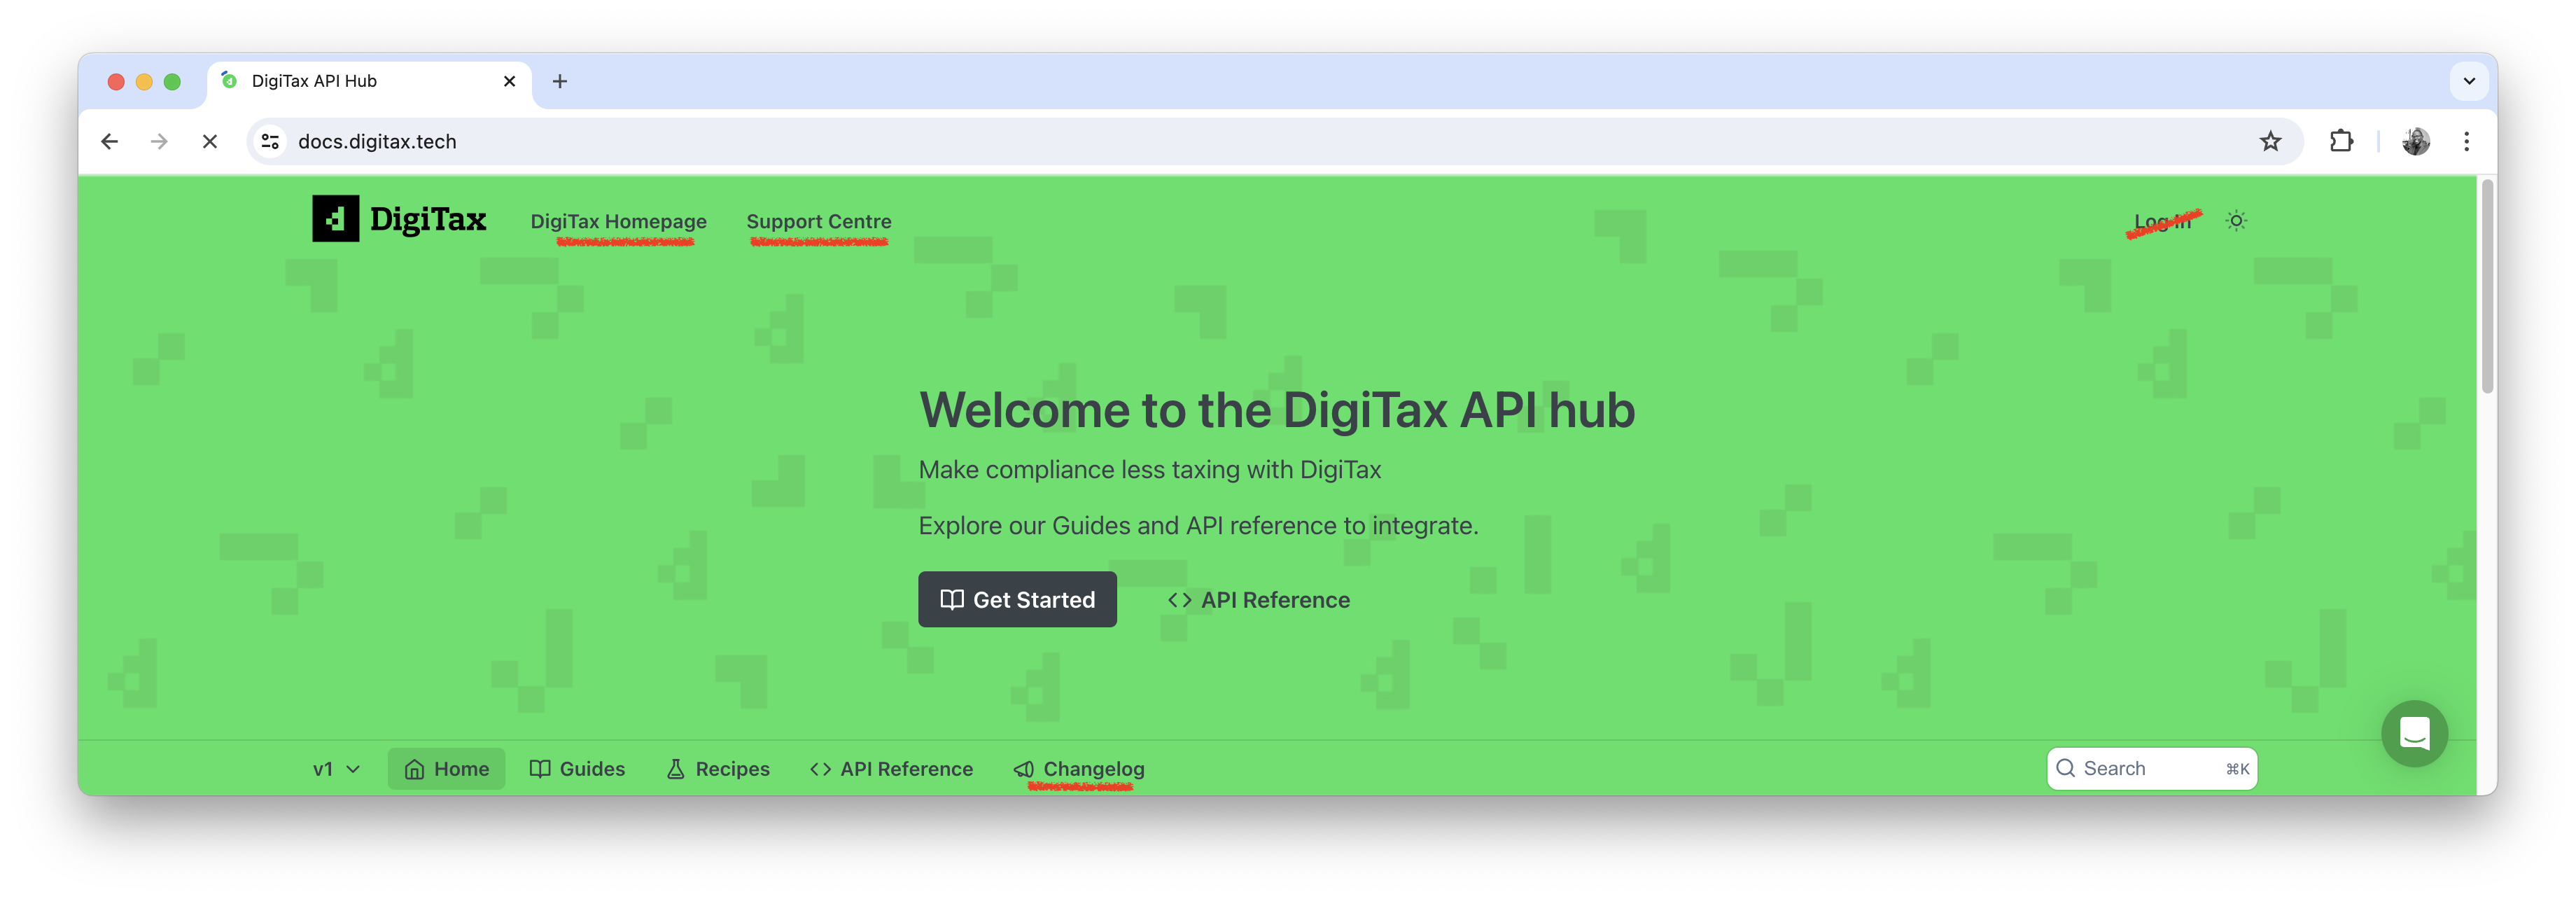 DigiTax API hub Homepage